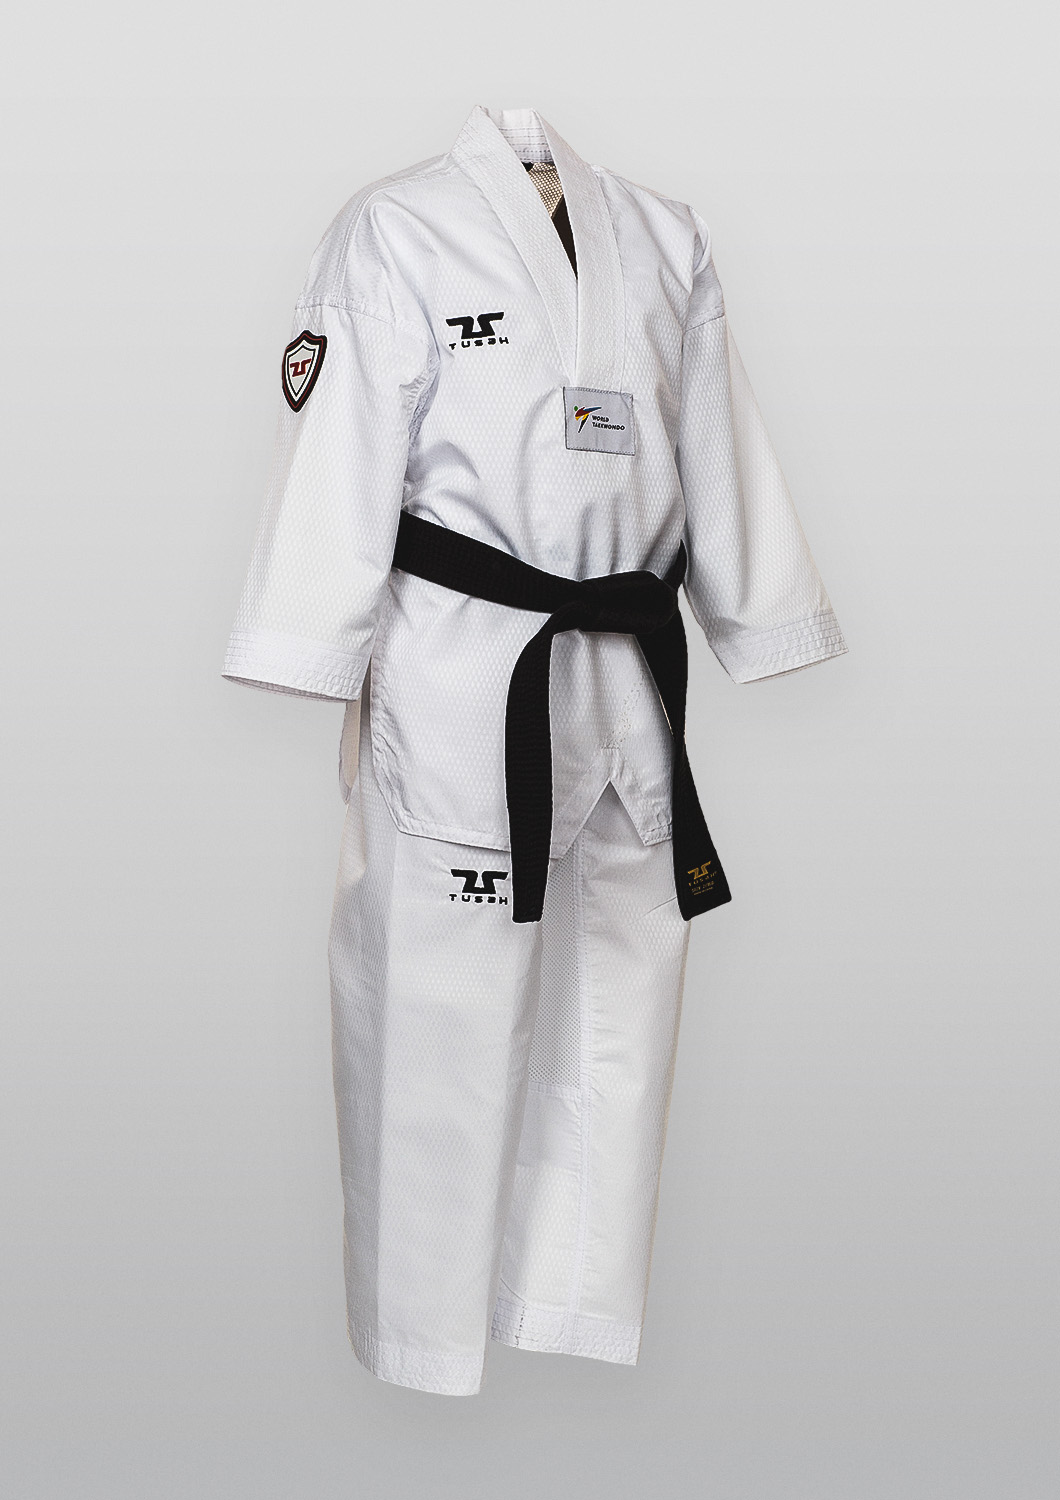 Adults World Taekwondo White Collar Fighter Uniform